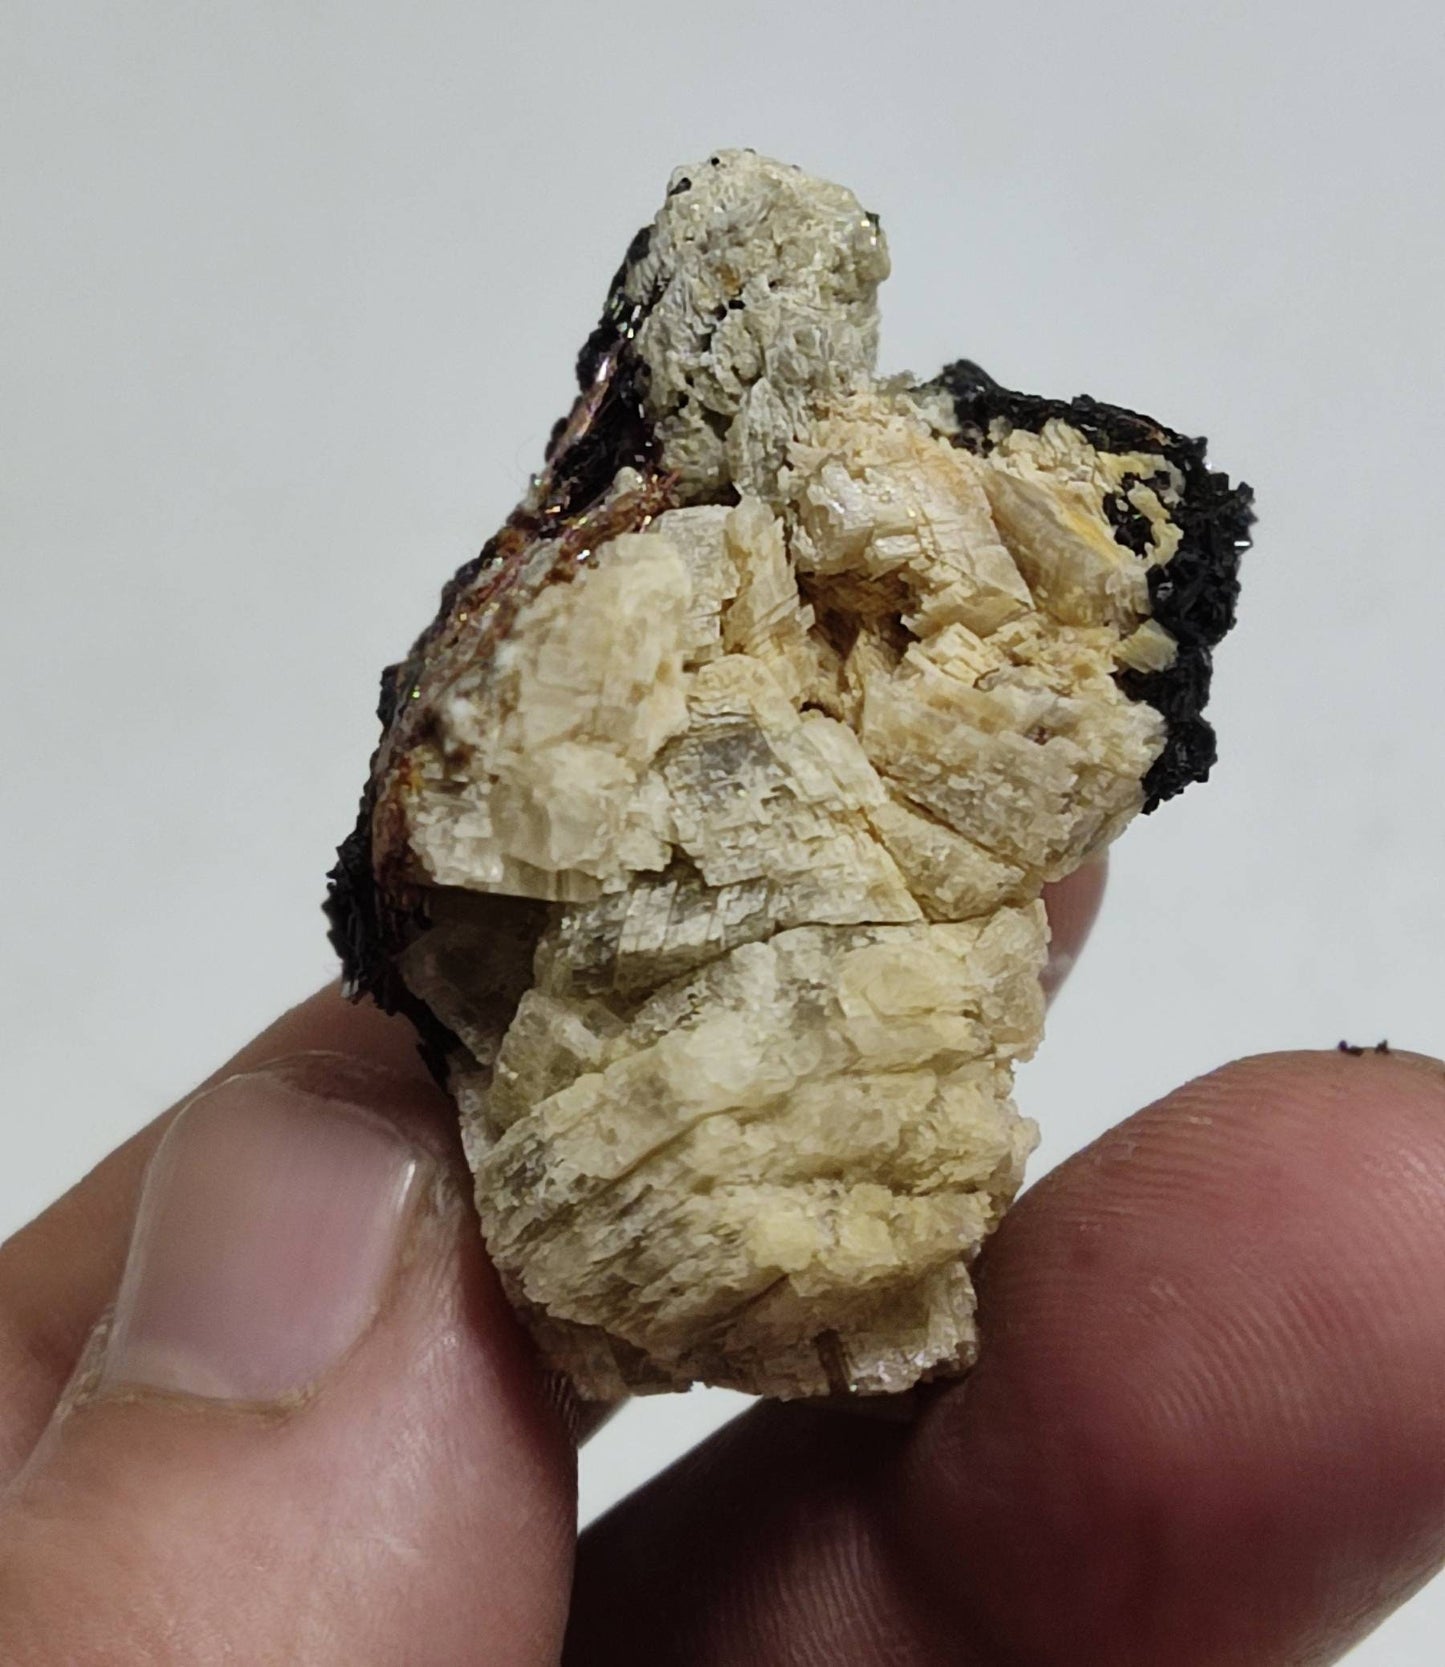 An amazing specimen of black tourmaline, siderite, and Rutile sagenite on matrix 29 grams